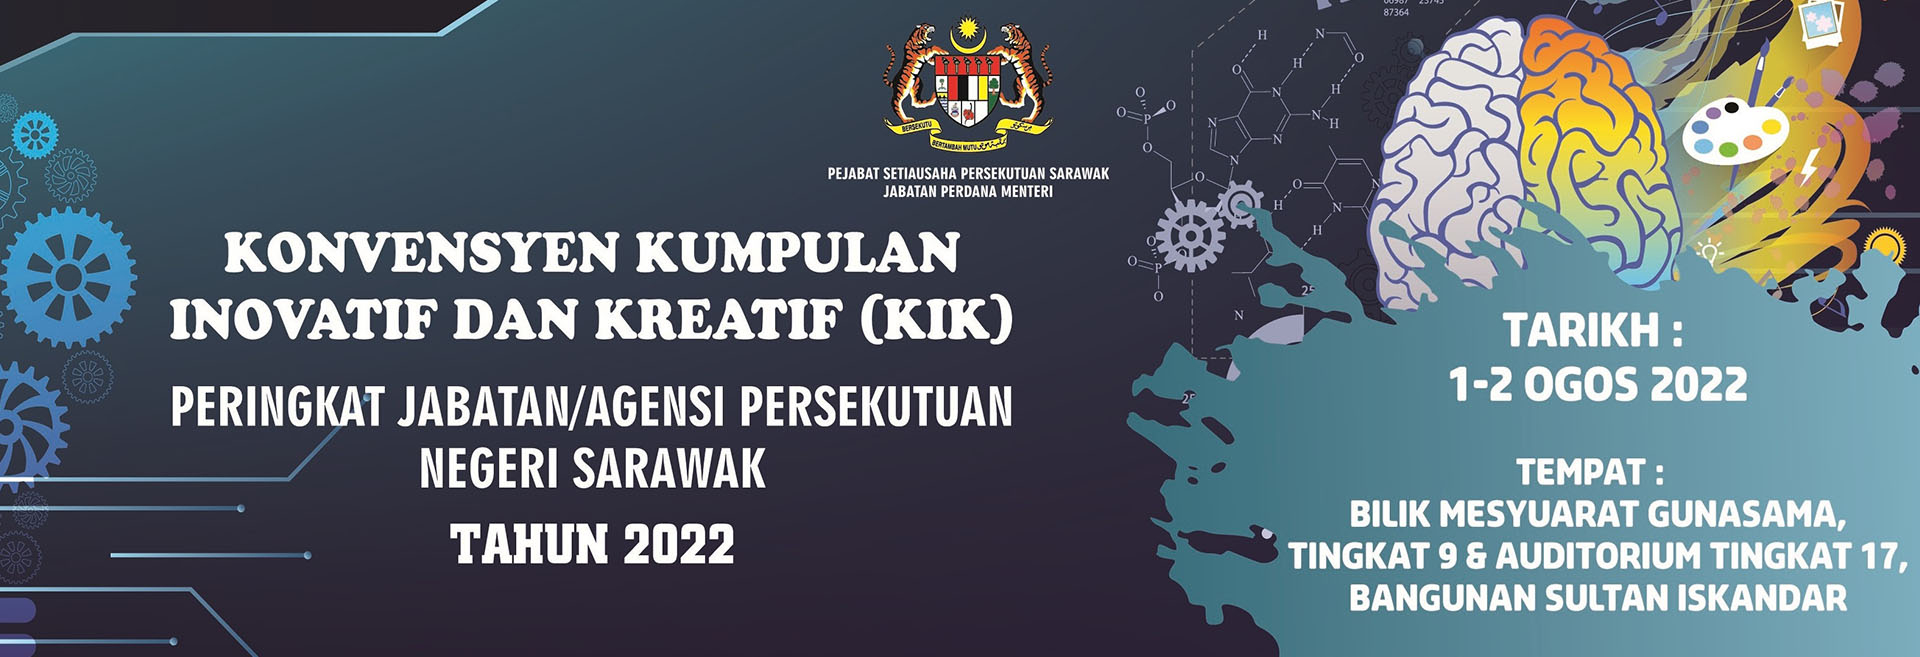 Montaj Konvensyen KIK Peringkat Jabatan/Agensi Persekutuan Negeri Sarawak 2022